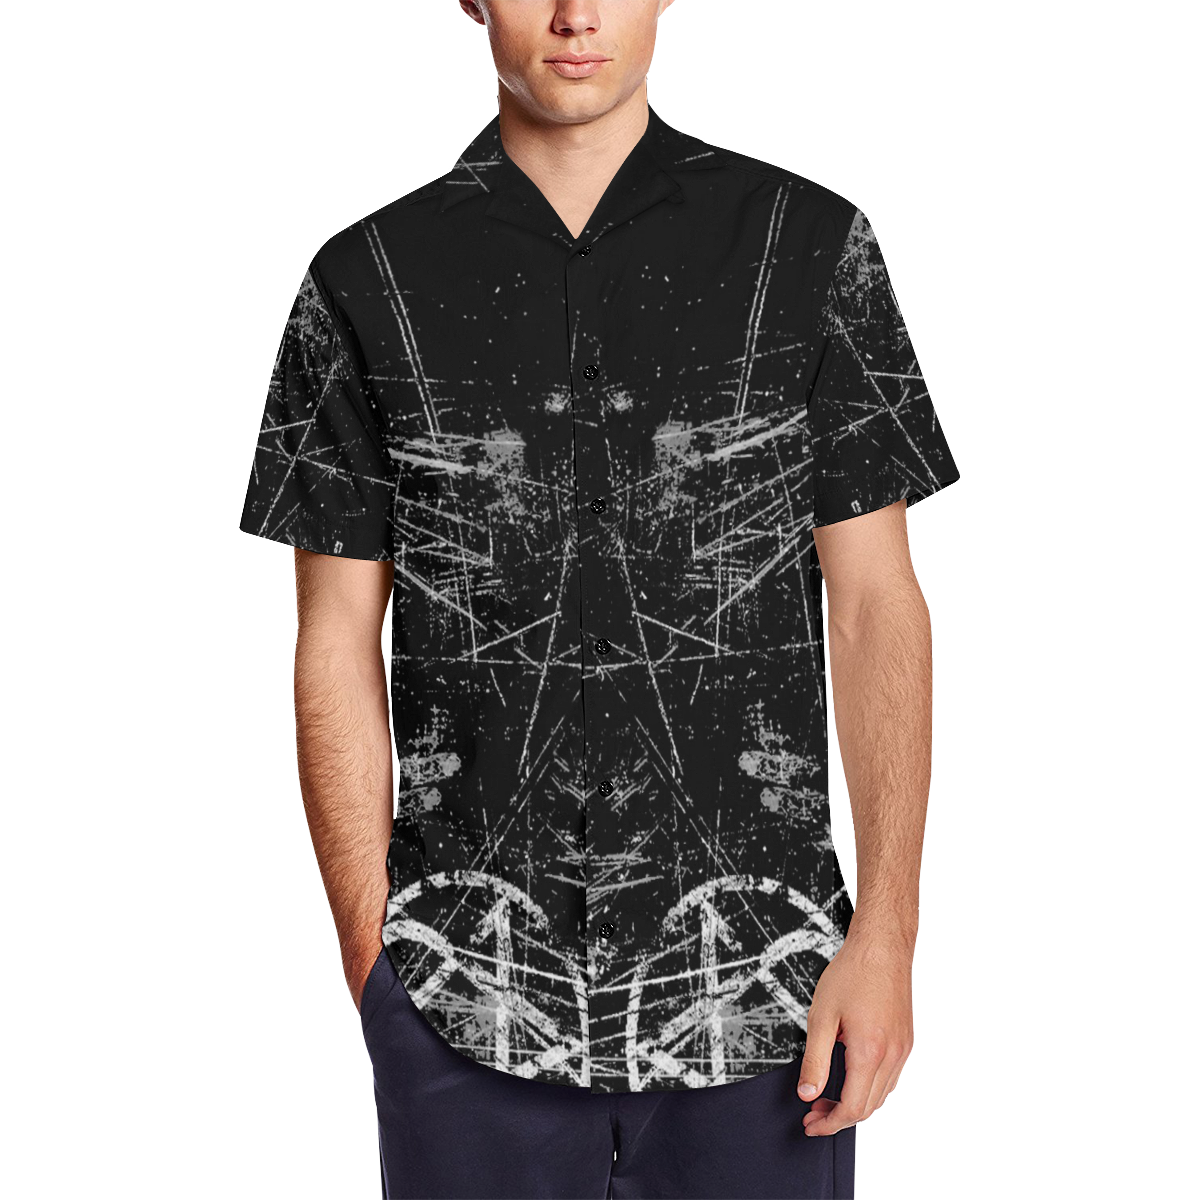 Gothic Emo - Gothic Underground Satin Dress Shirt Men's Short Sleeve ...